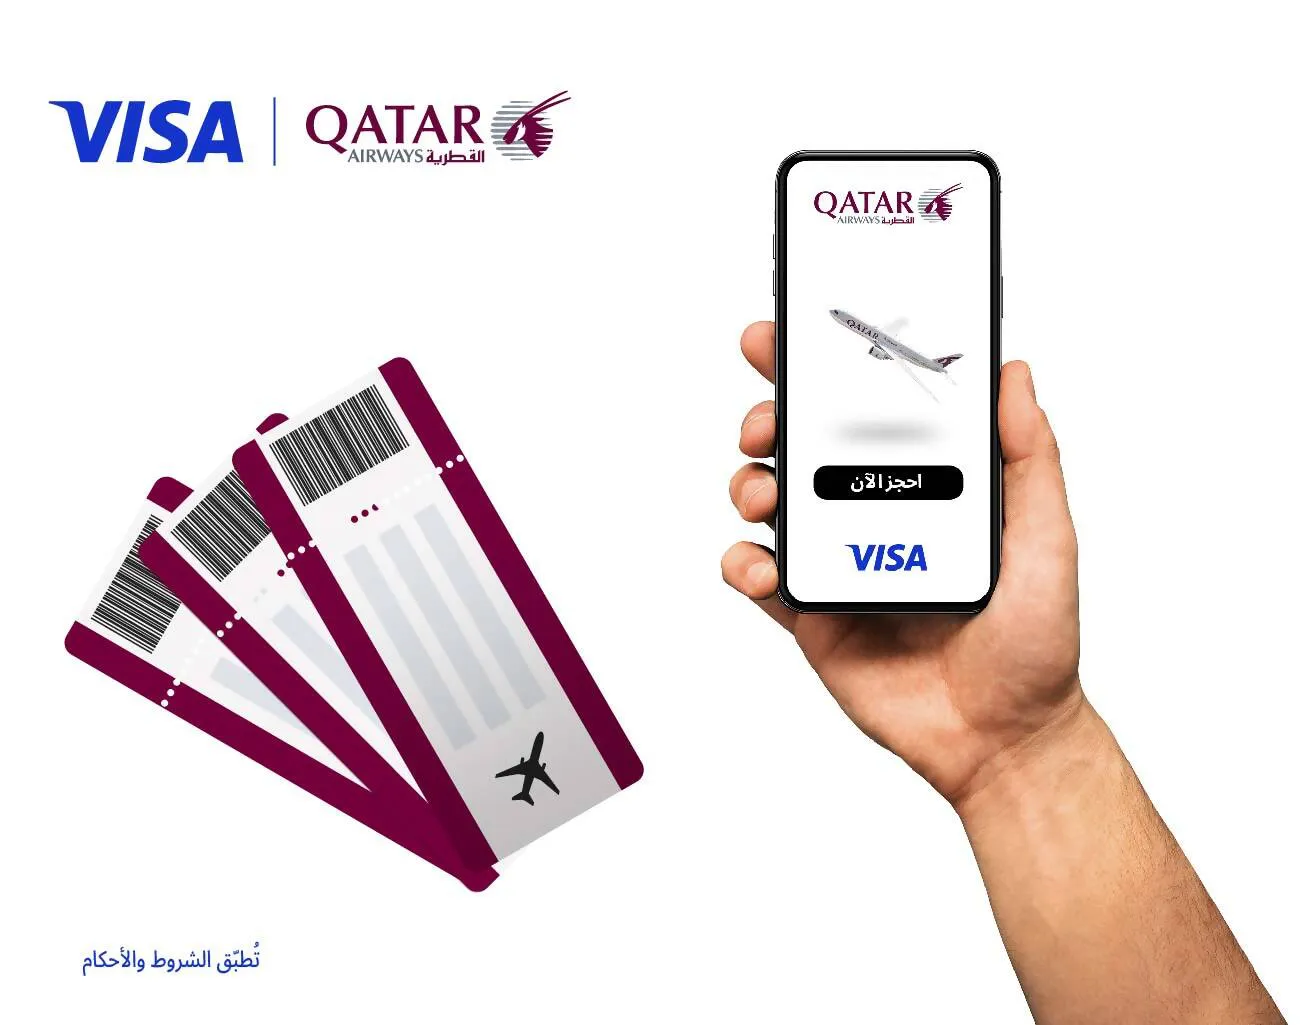 Visa Cross Border Qatar Airways KV_312x246